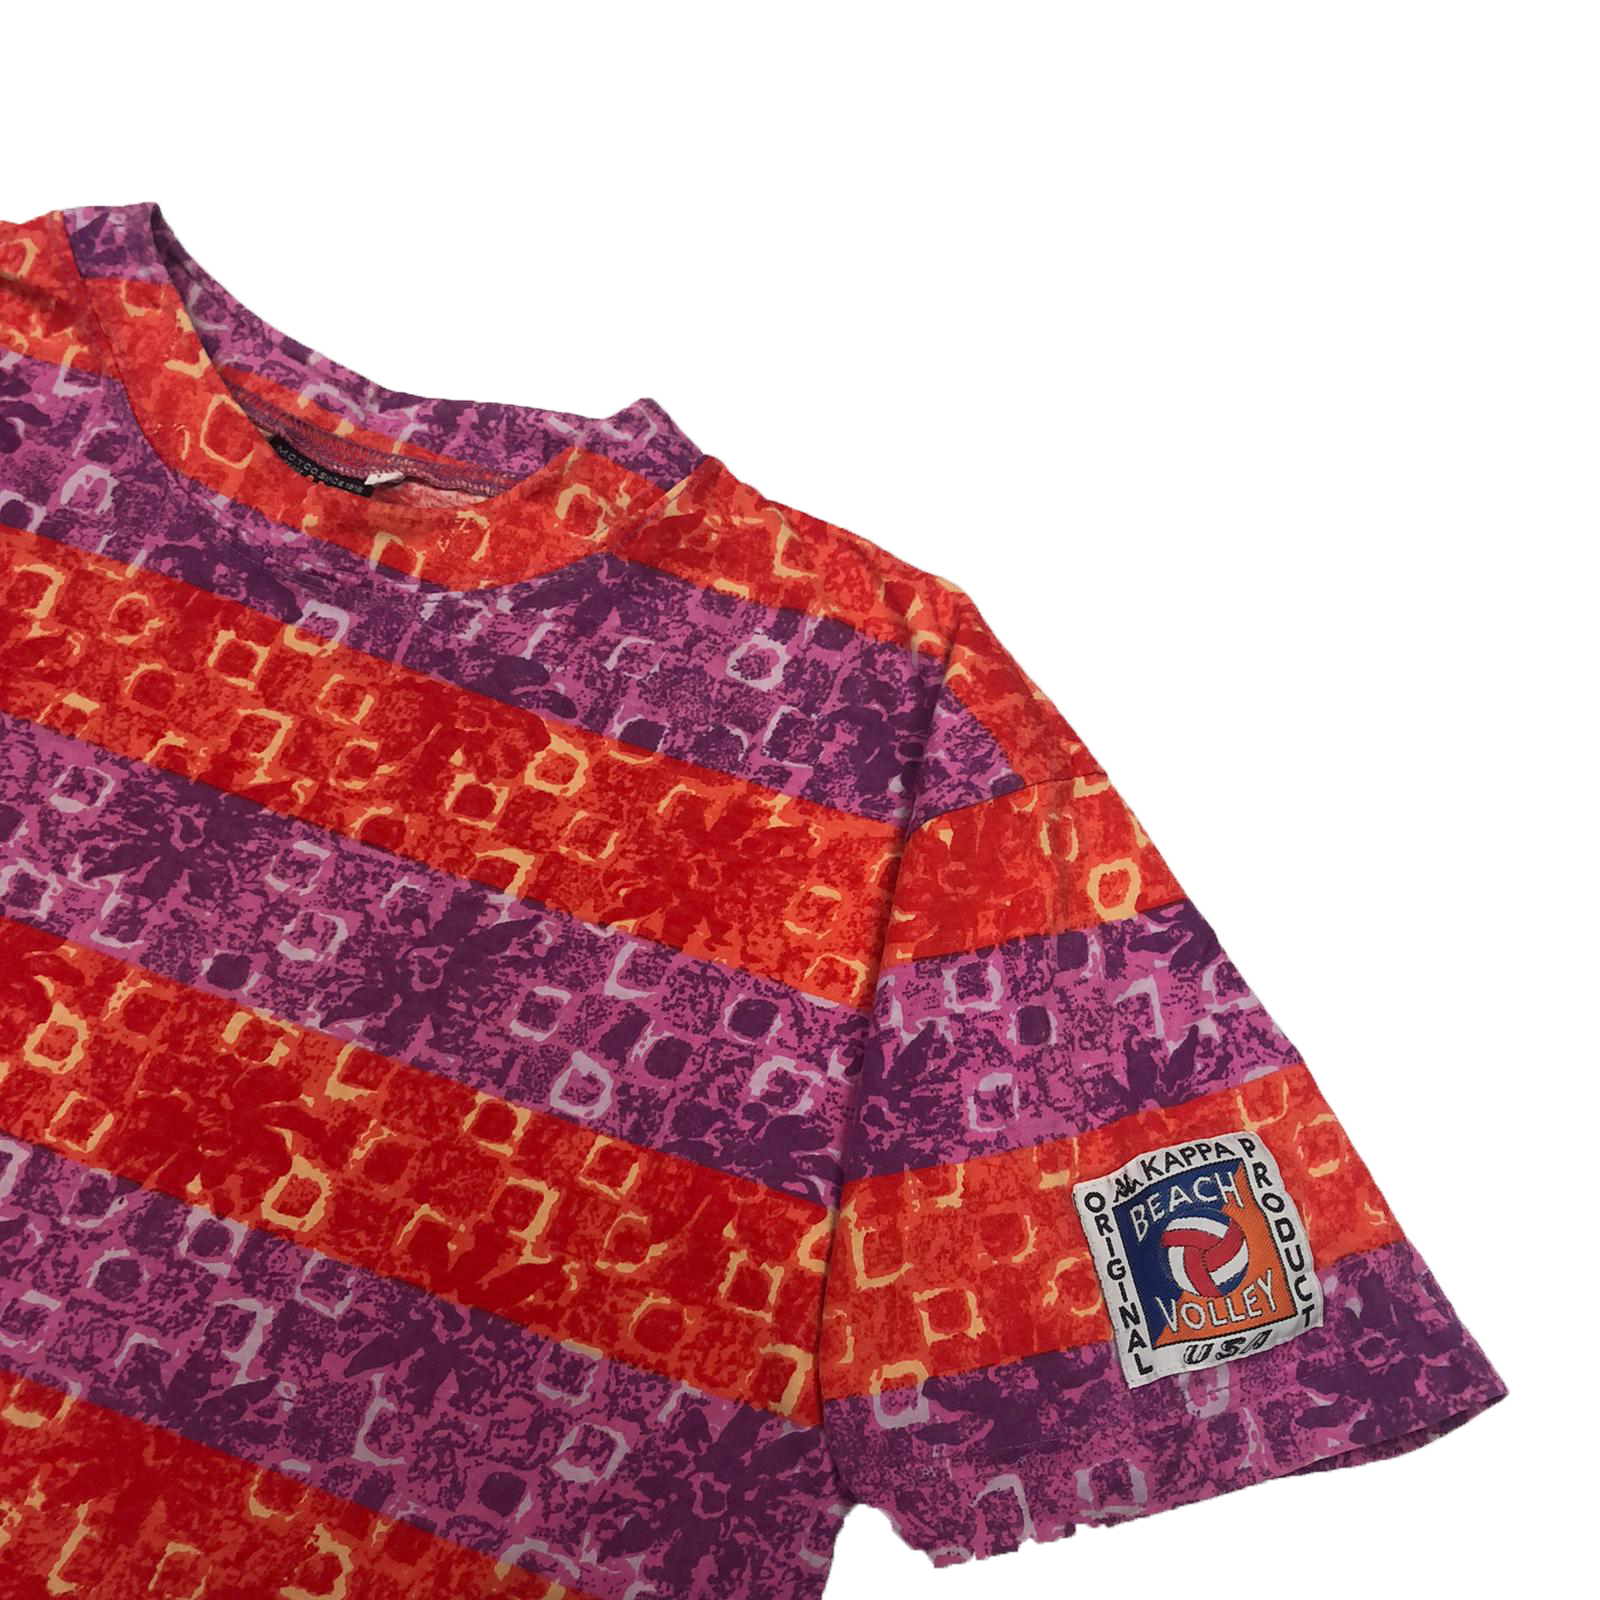 90's Kappa t-shirt